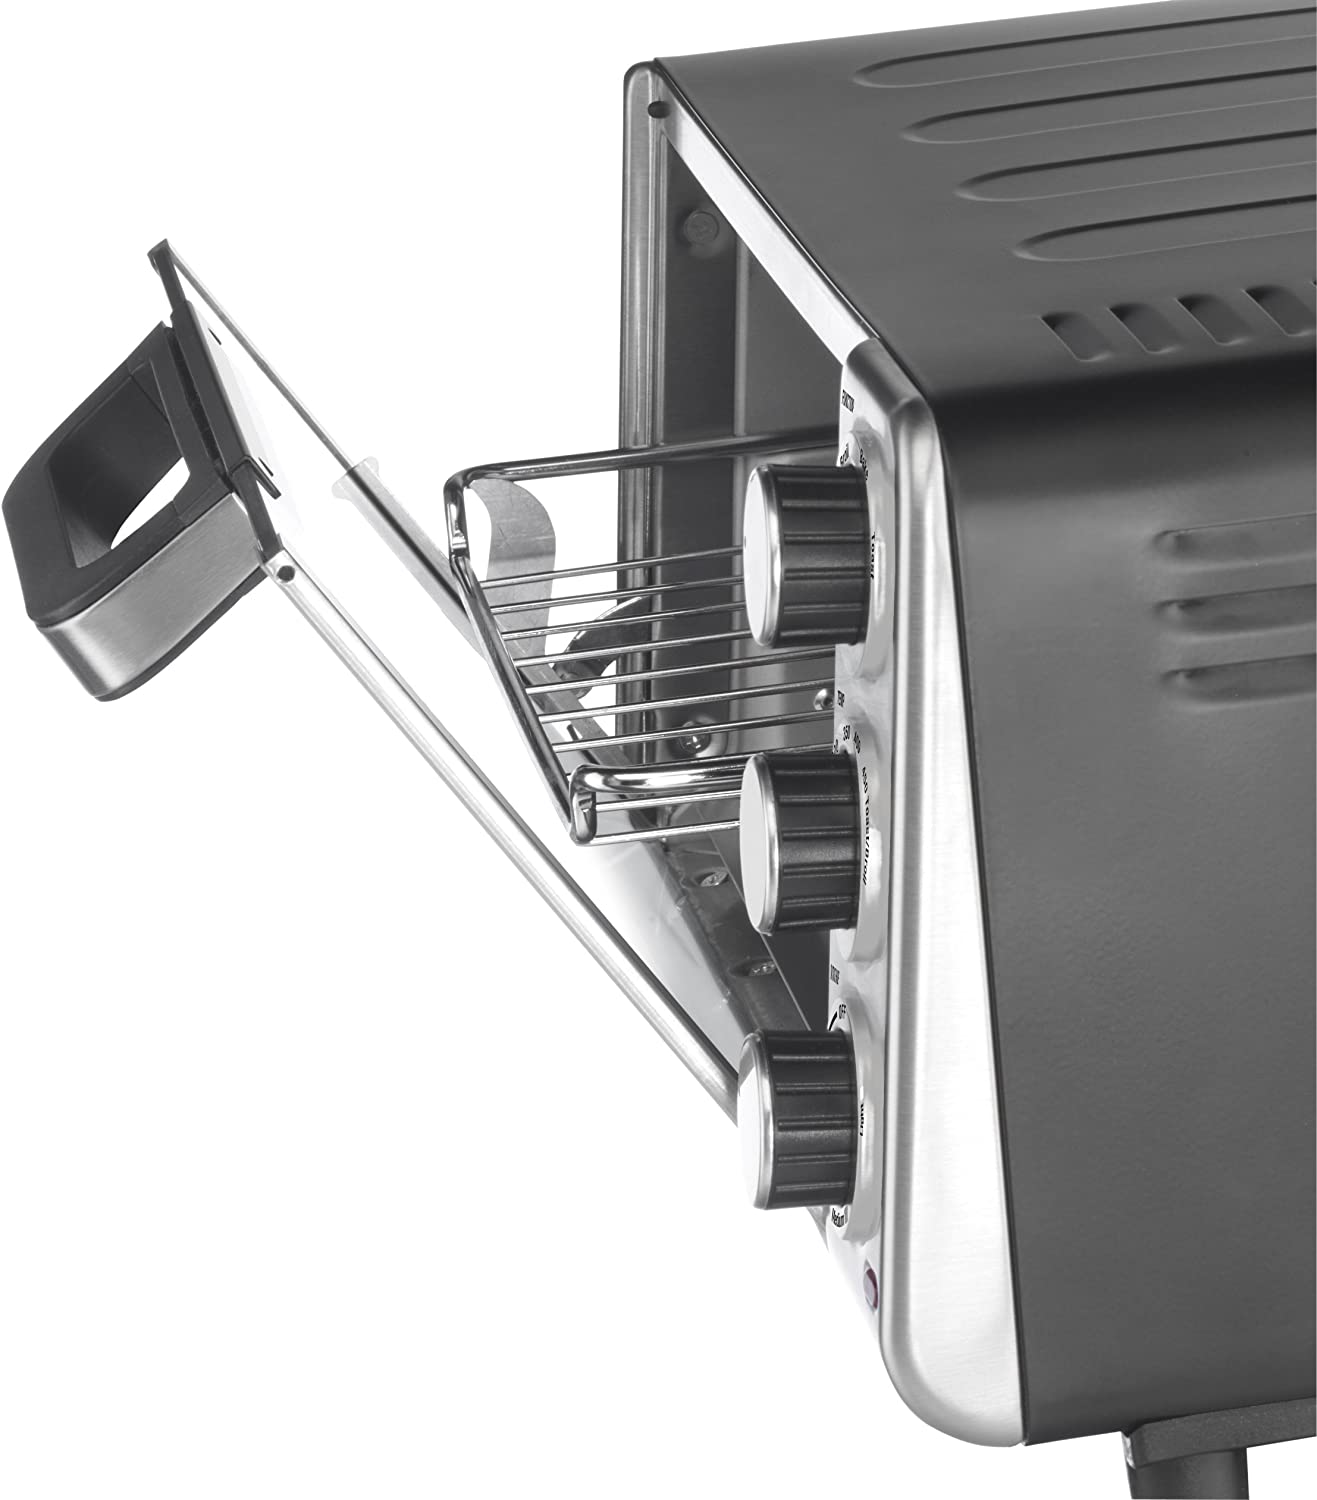 Cuisinart TOB-80FR Compact Broiler Toaster Oven Black - Certified Refurbished